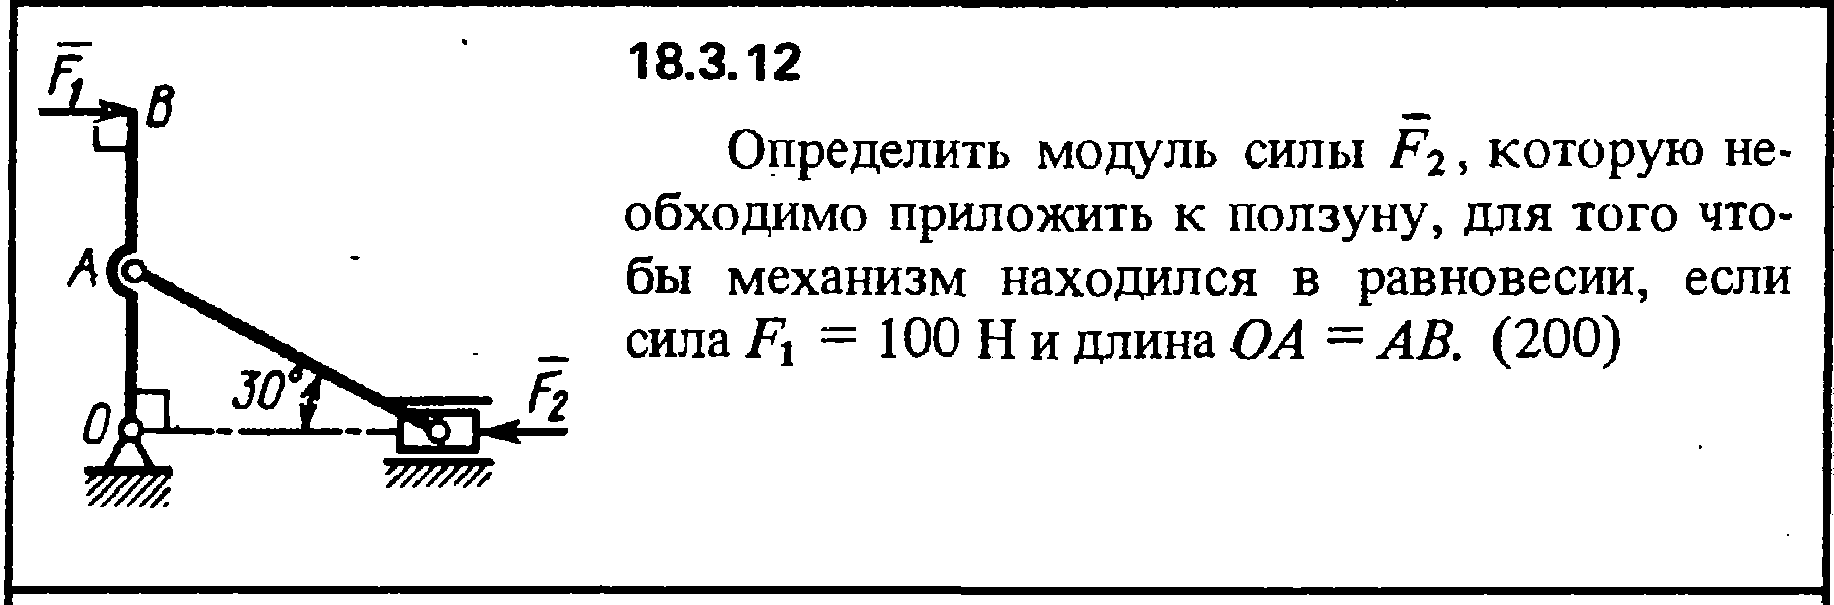 Решение 18.3.12 из сборника (решебника) Кепе О.Е. 1989